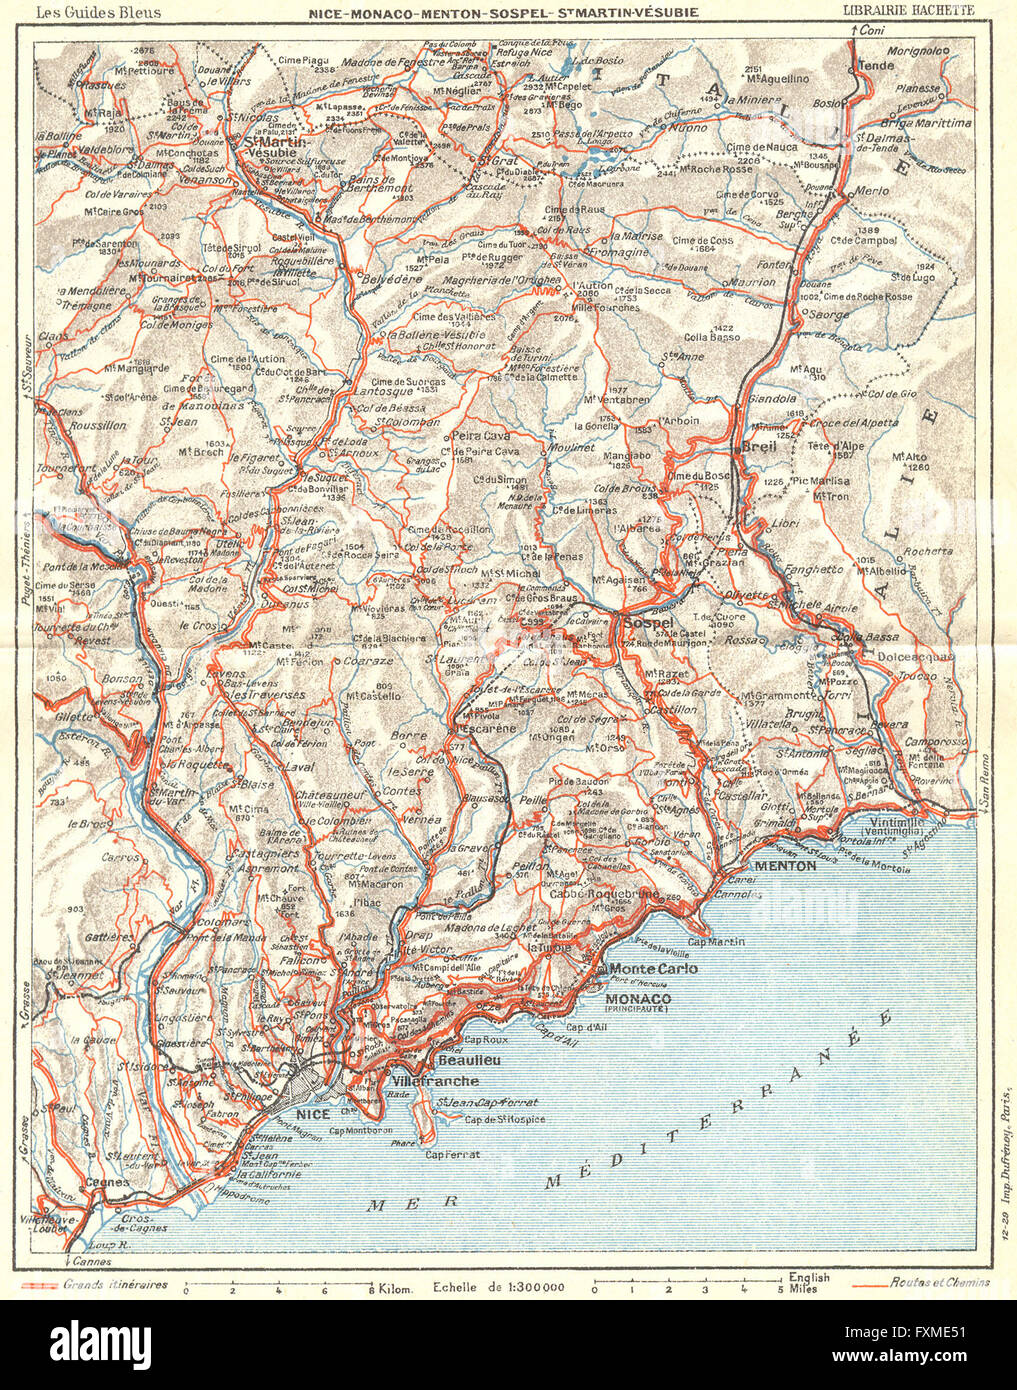 COTE D'AZUR: Nice Monaco Menton Vesubie, 1926 vintage map Stock Photo